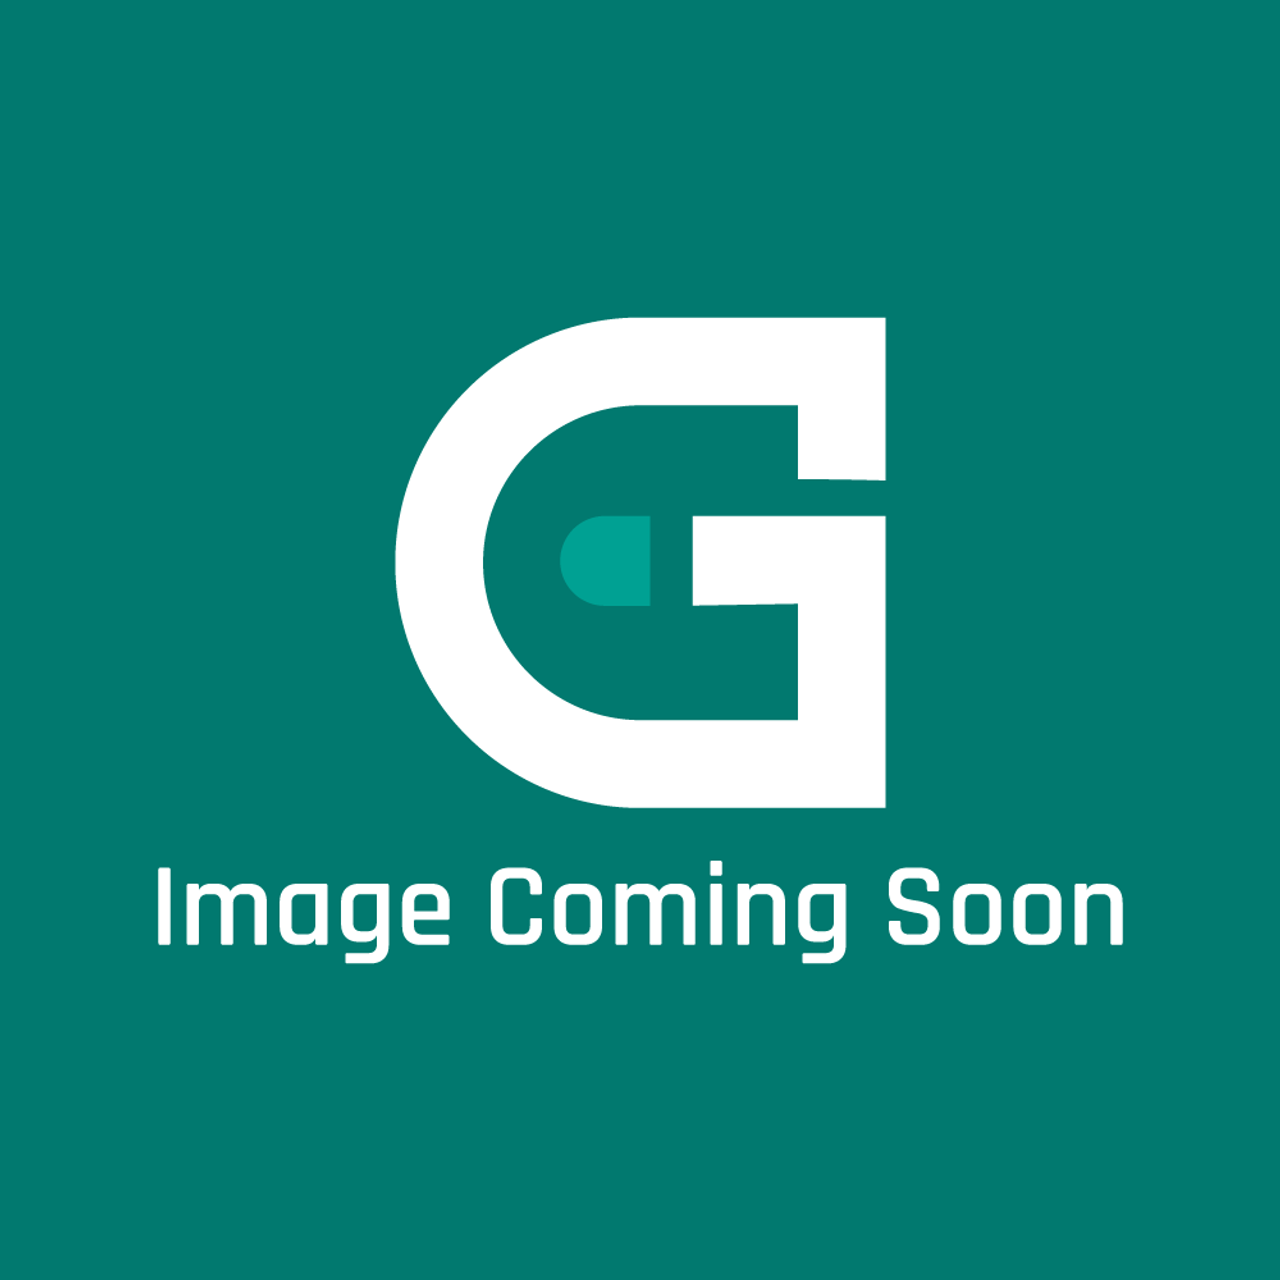 Anets B3332301-C - Tk, Wldmt & Shpng Gpc14 - Image Coming Soon!